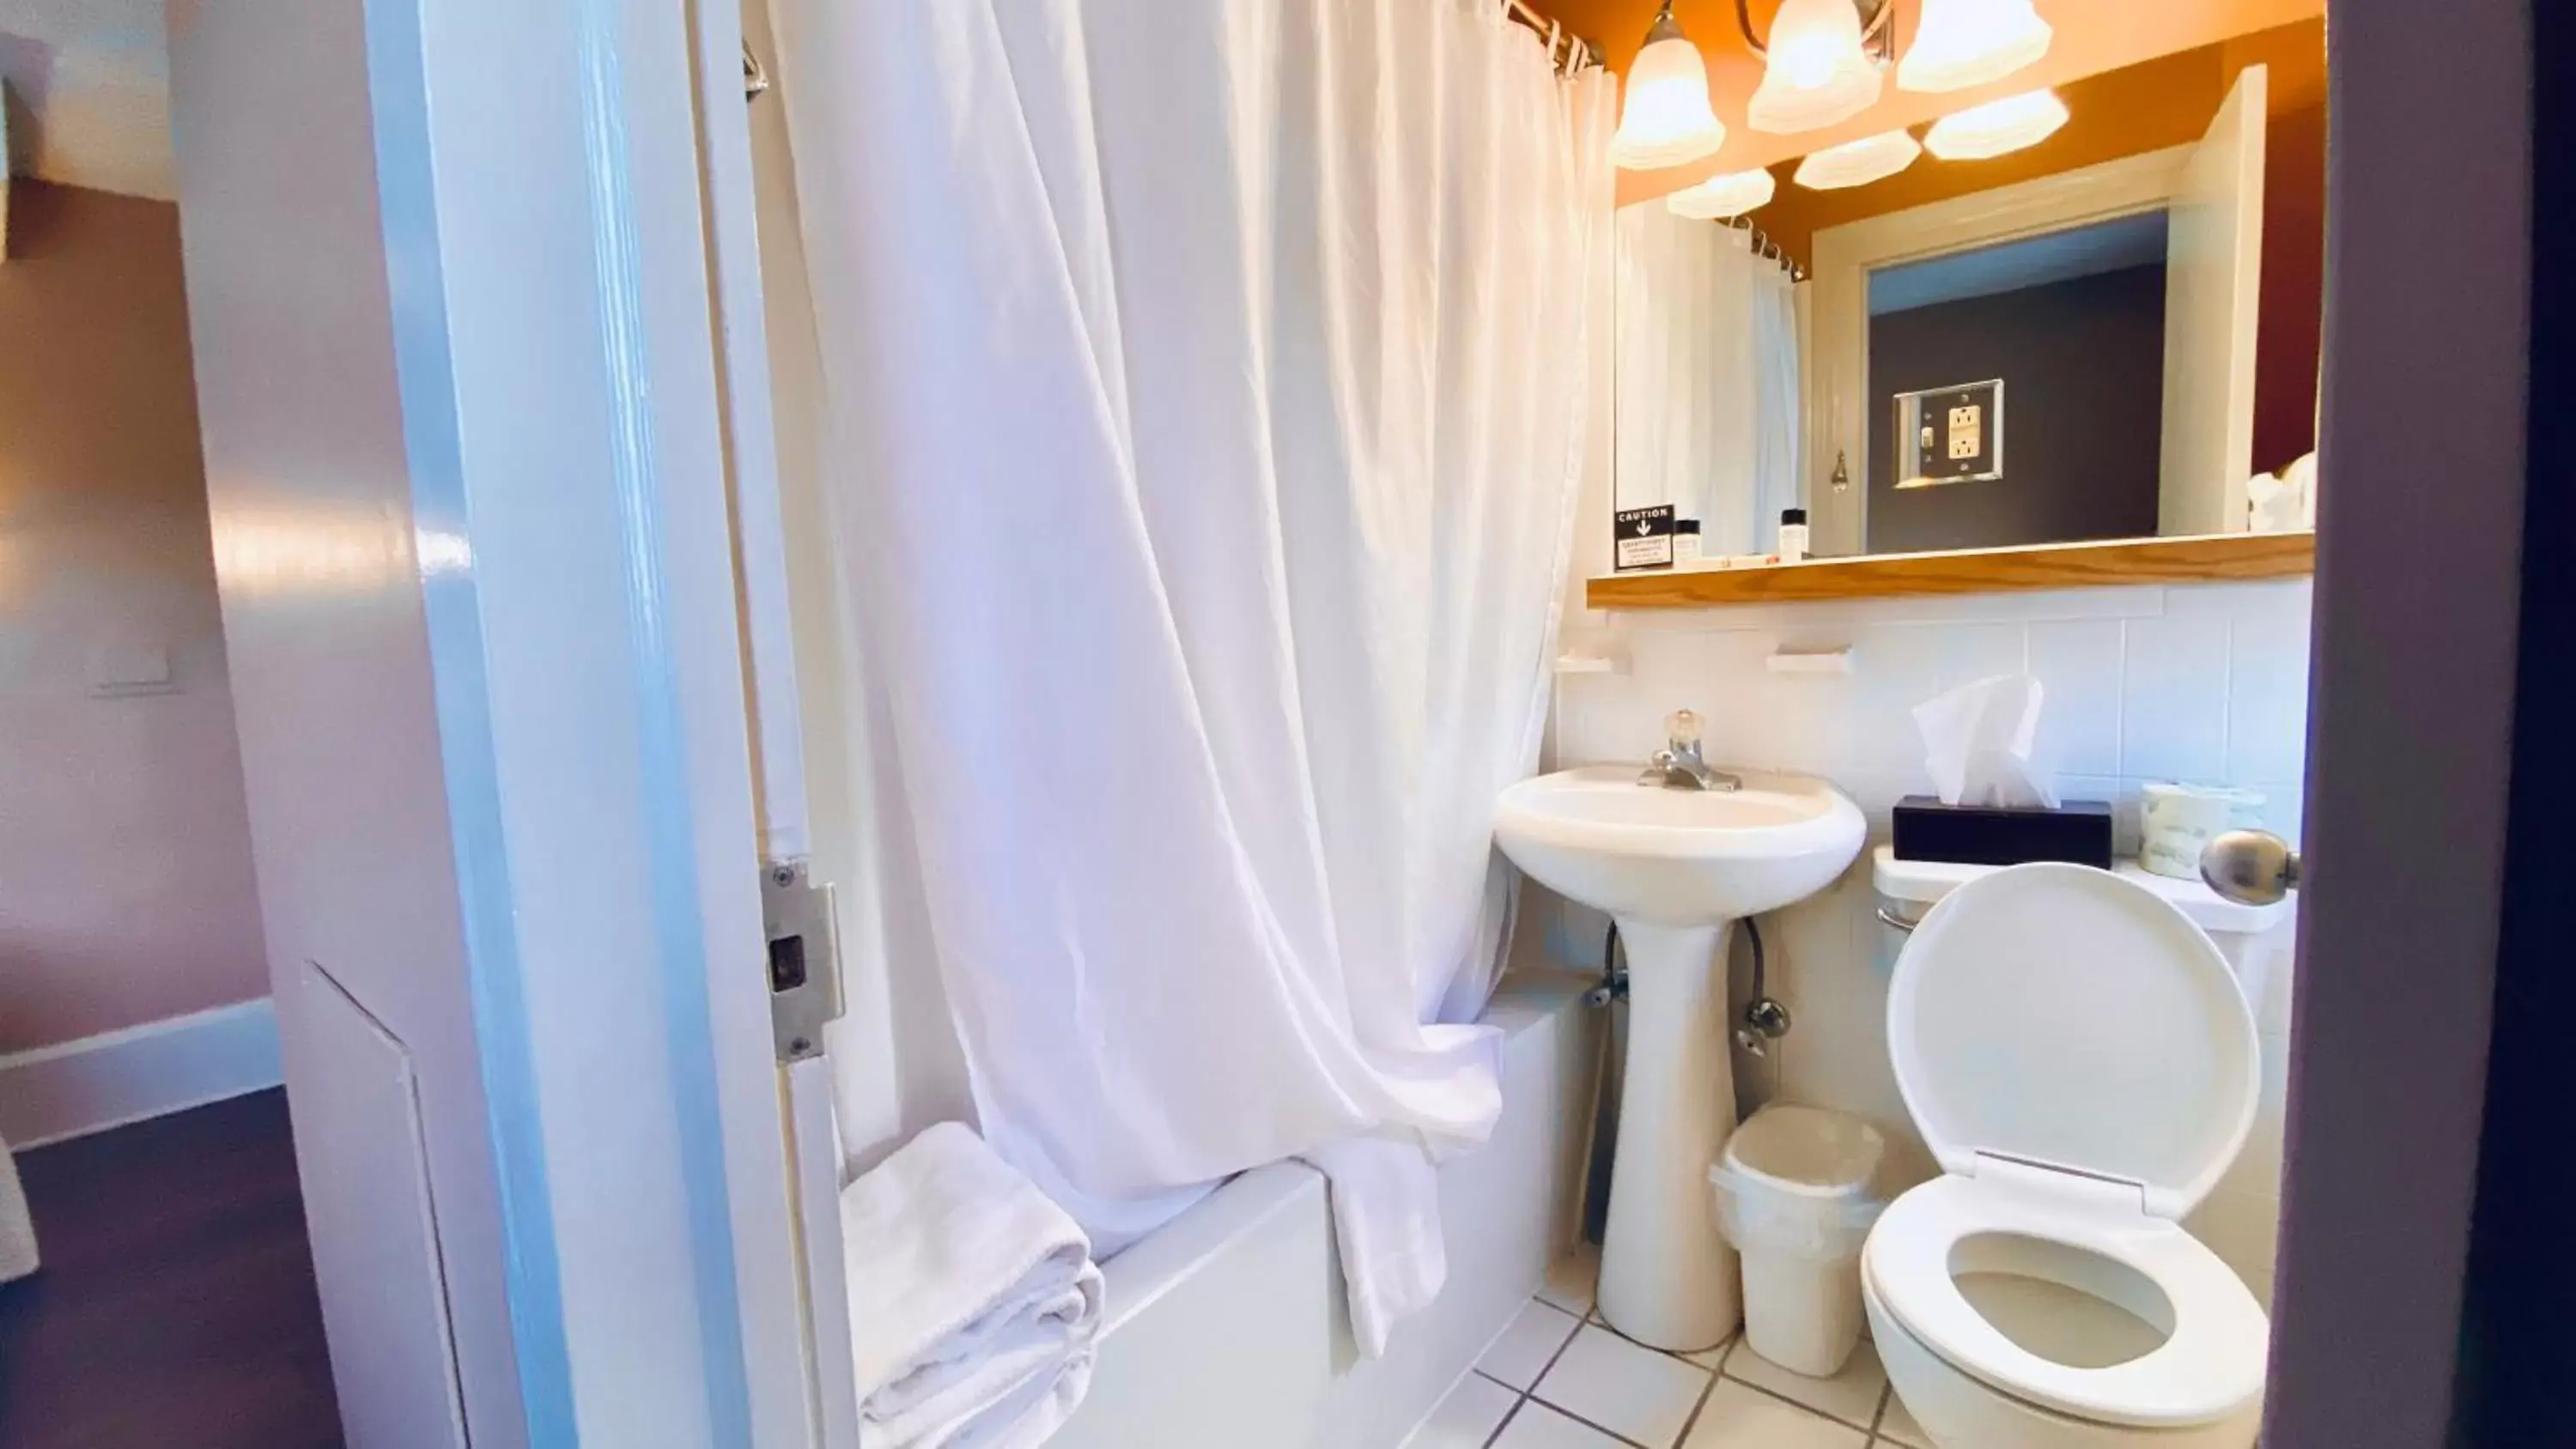 Bathroom in Shawnee Inn and Golf Resort